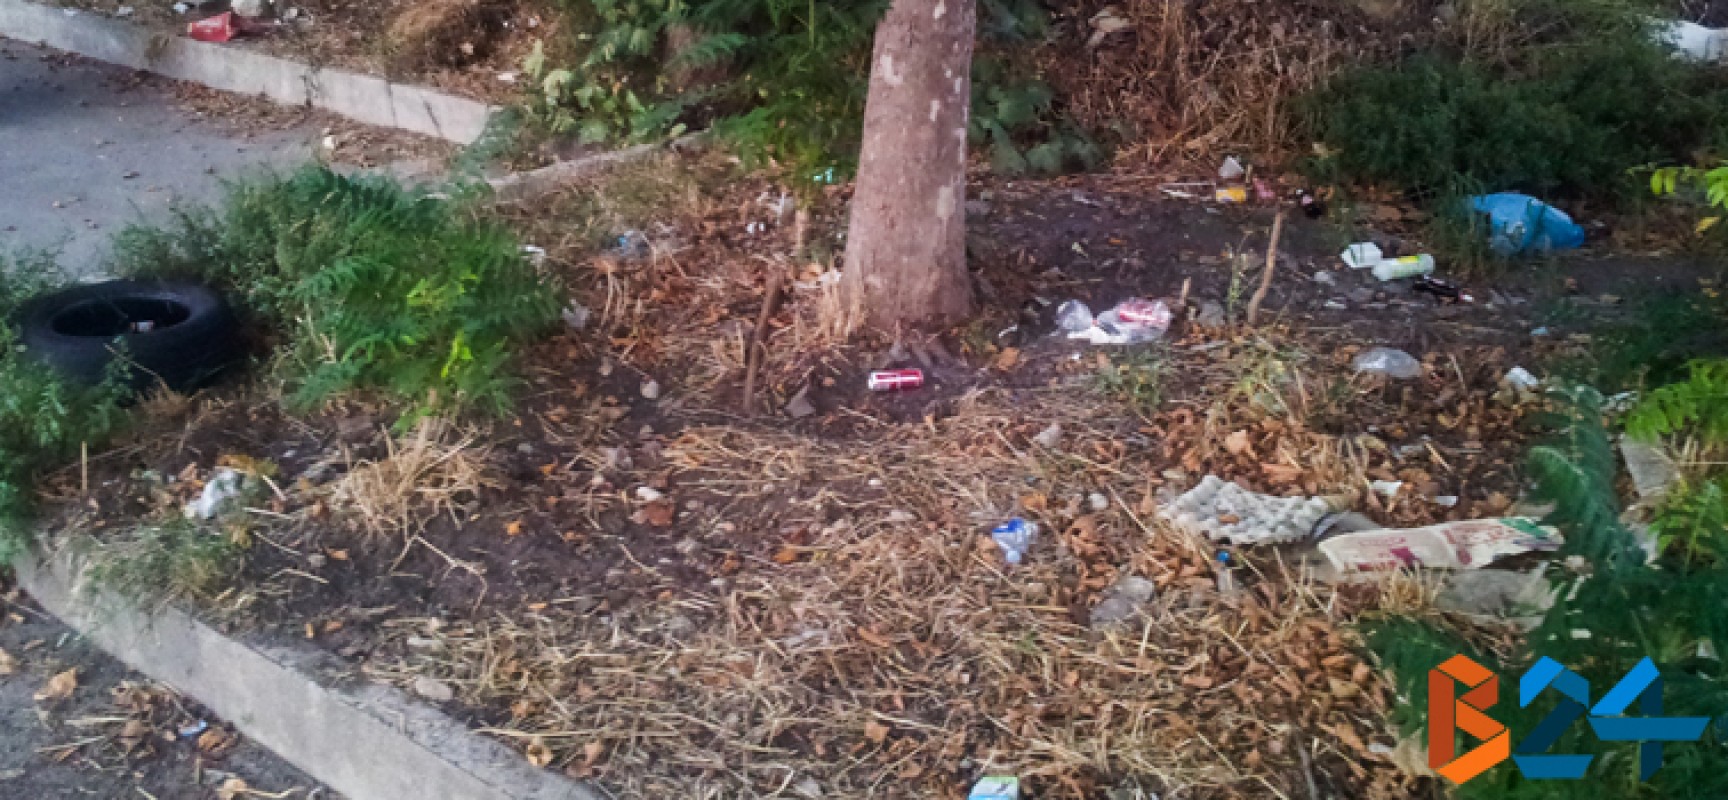 Via Santa Chiara d’Assisi abbandonata tra rifiuti e incuria / FOTO